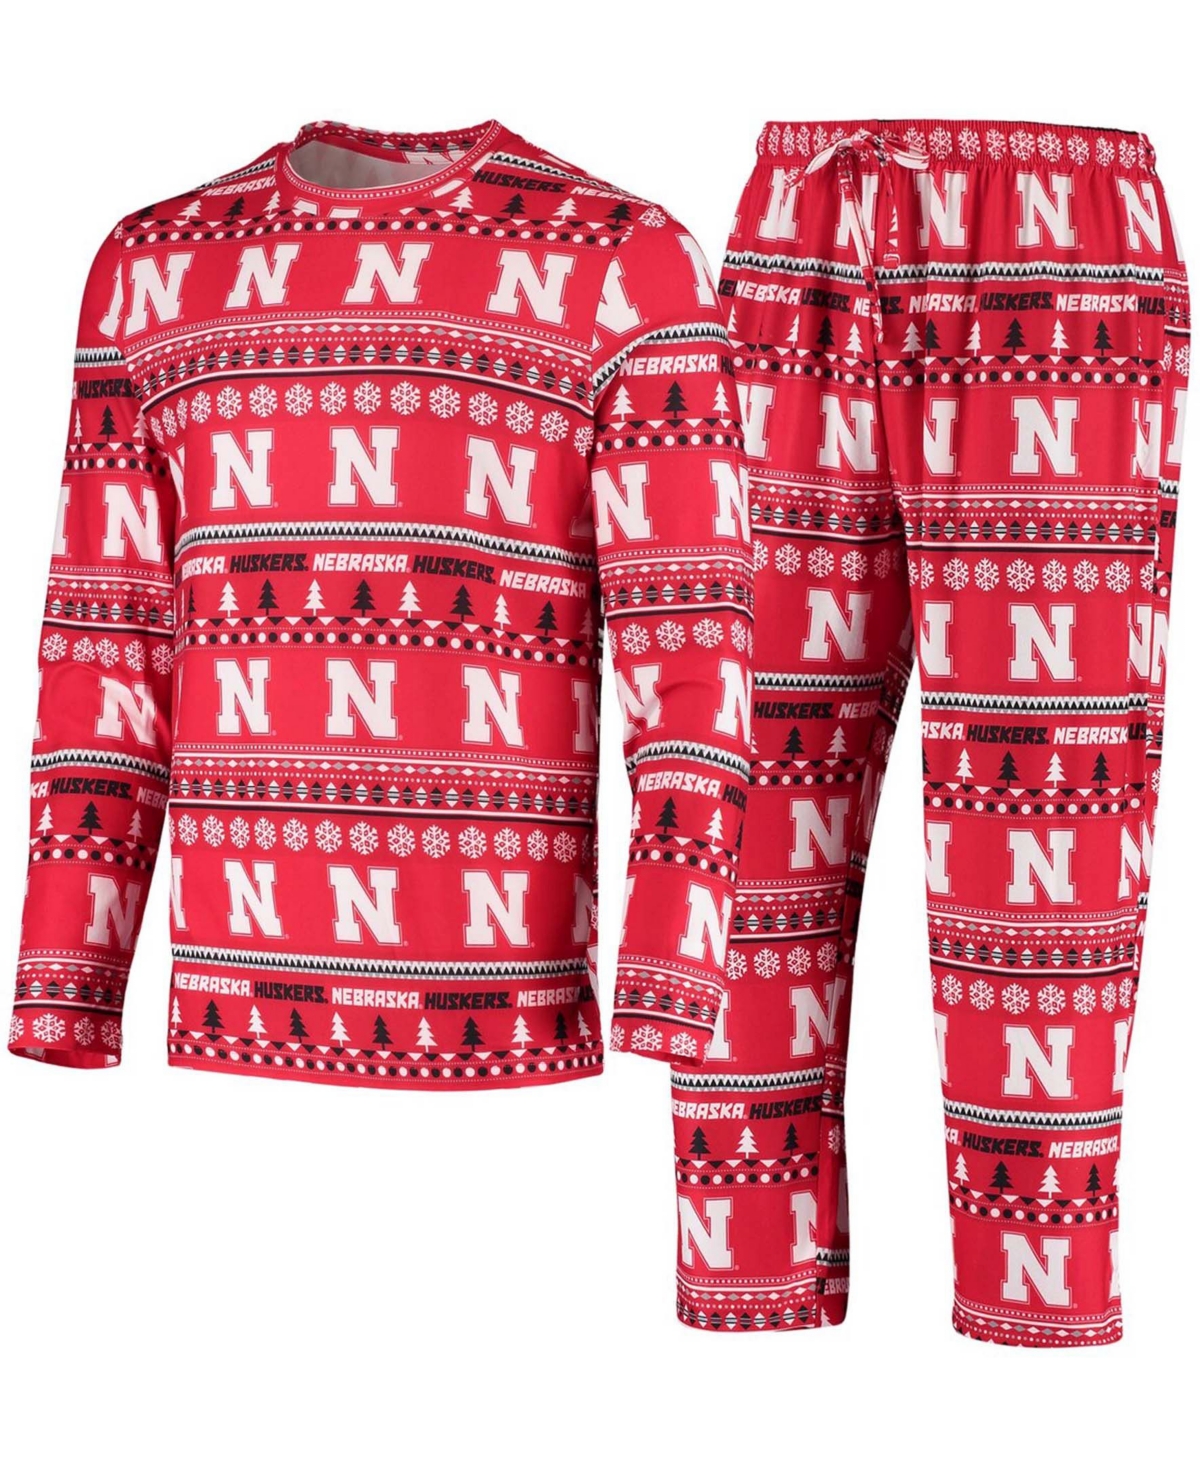 Men's Scarlet Nebraska Huskers Ugly Sweater Knit Long Sleeve Top and Pant Set - Scarlet